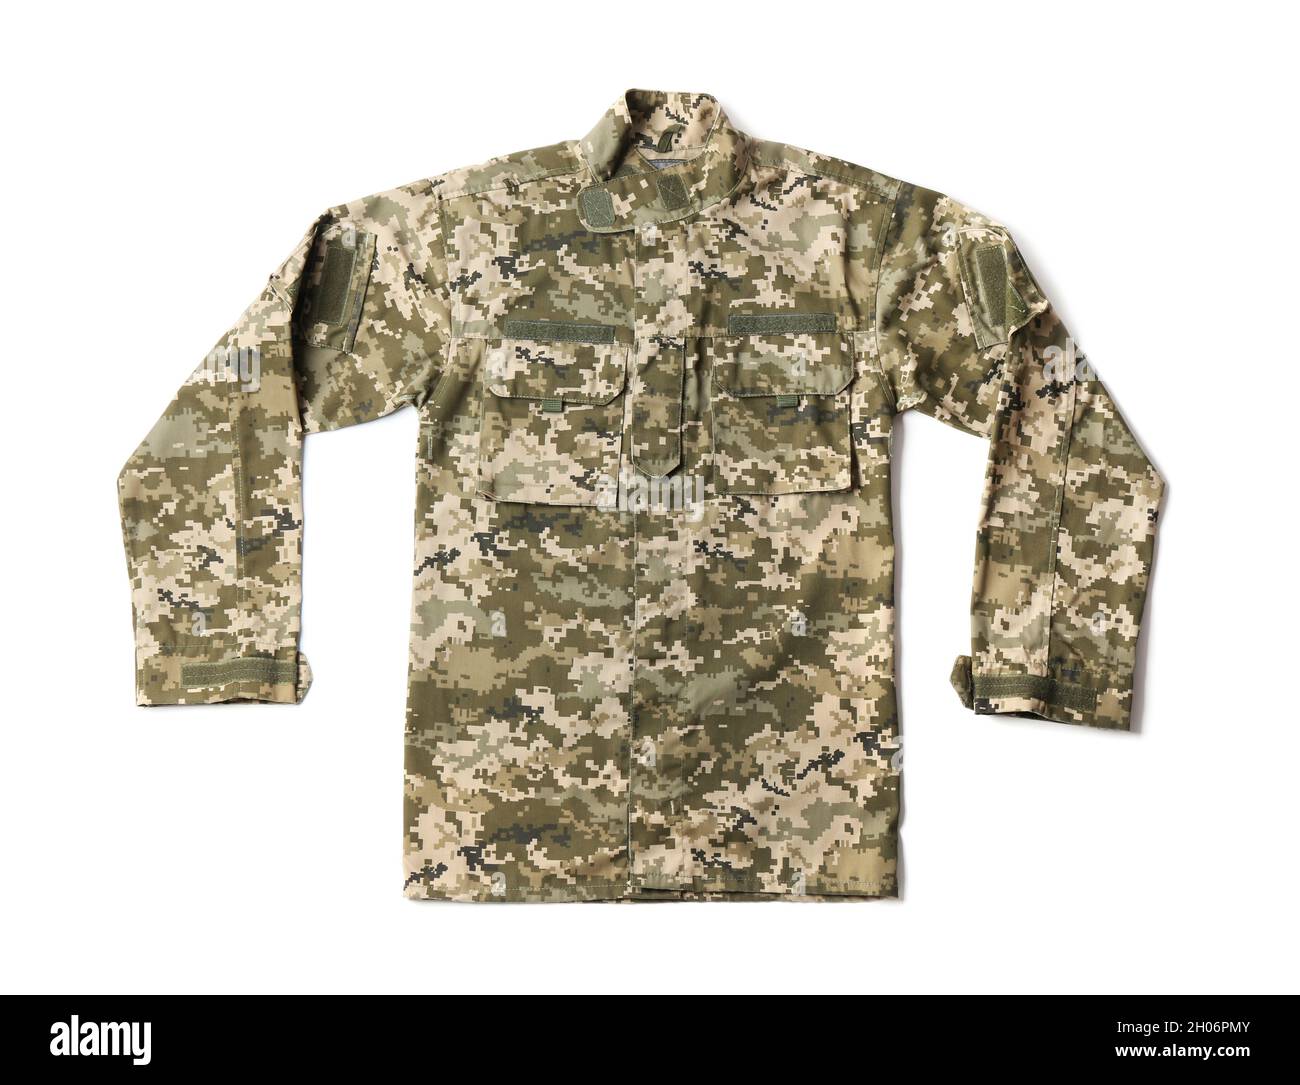 Military clothes on white background Stock Photo - Alamy